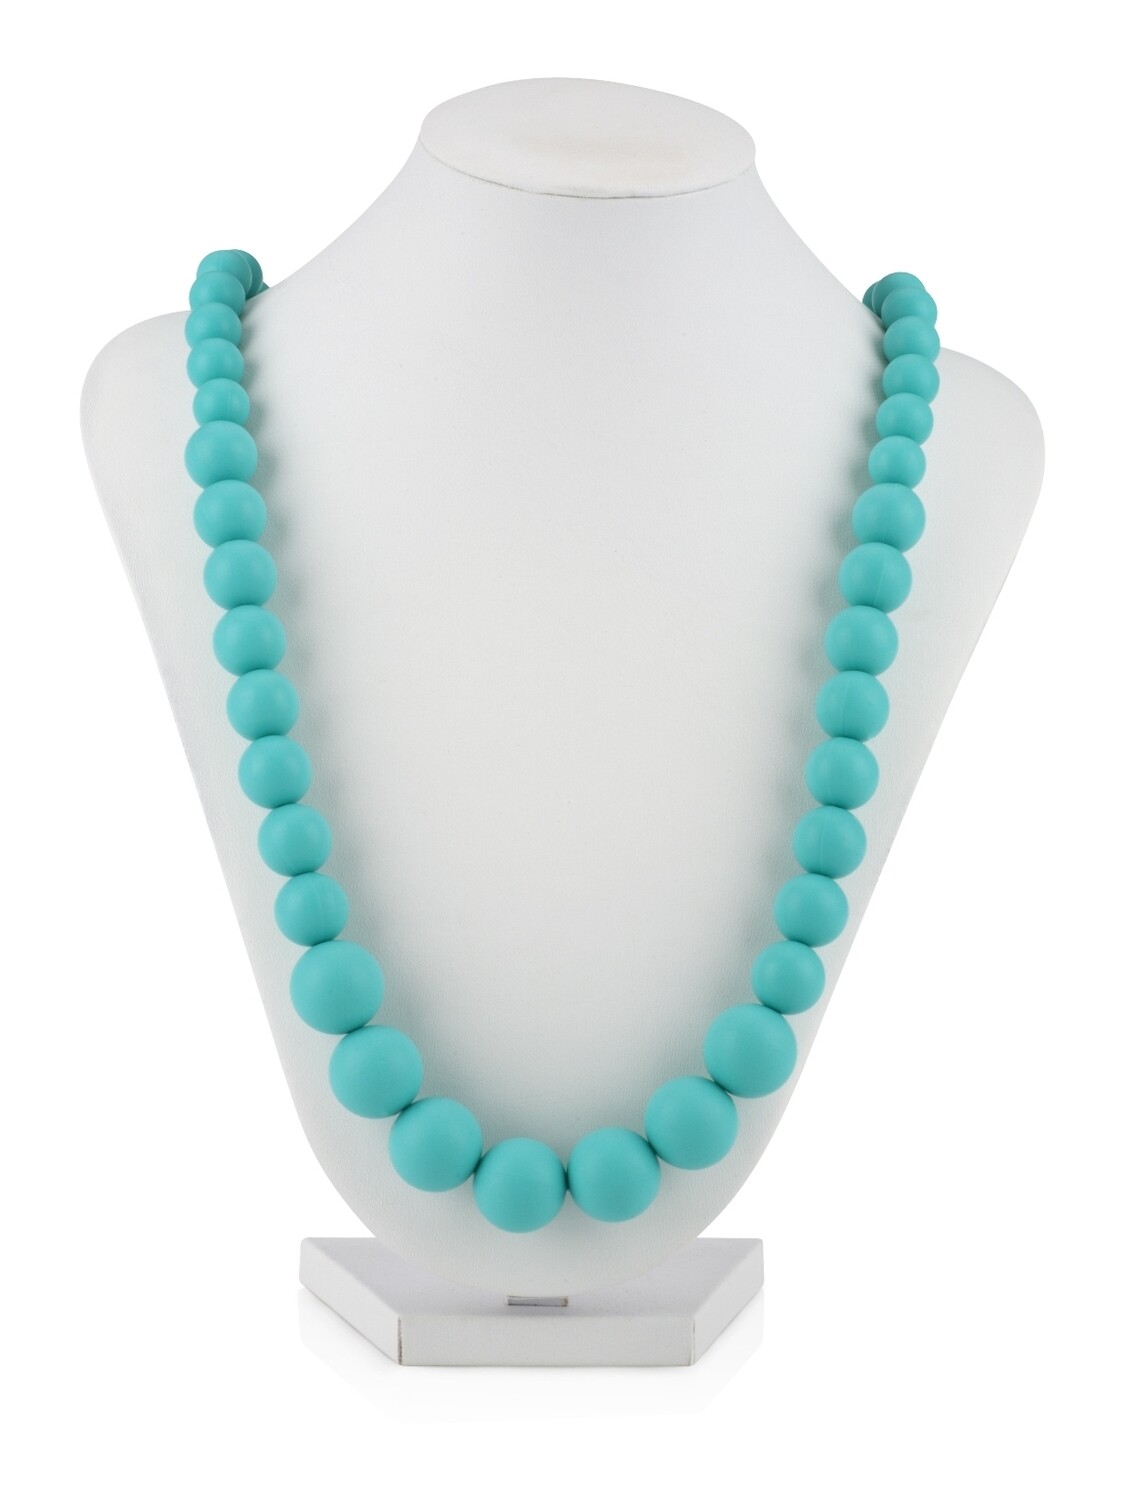 . Case of [12] Nuby Round Beads Teething Necklaces - Aqua, 29.5" .